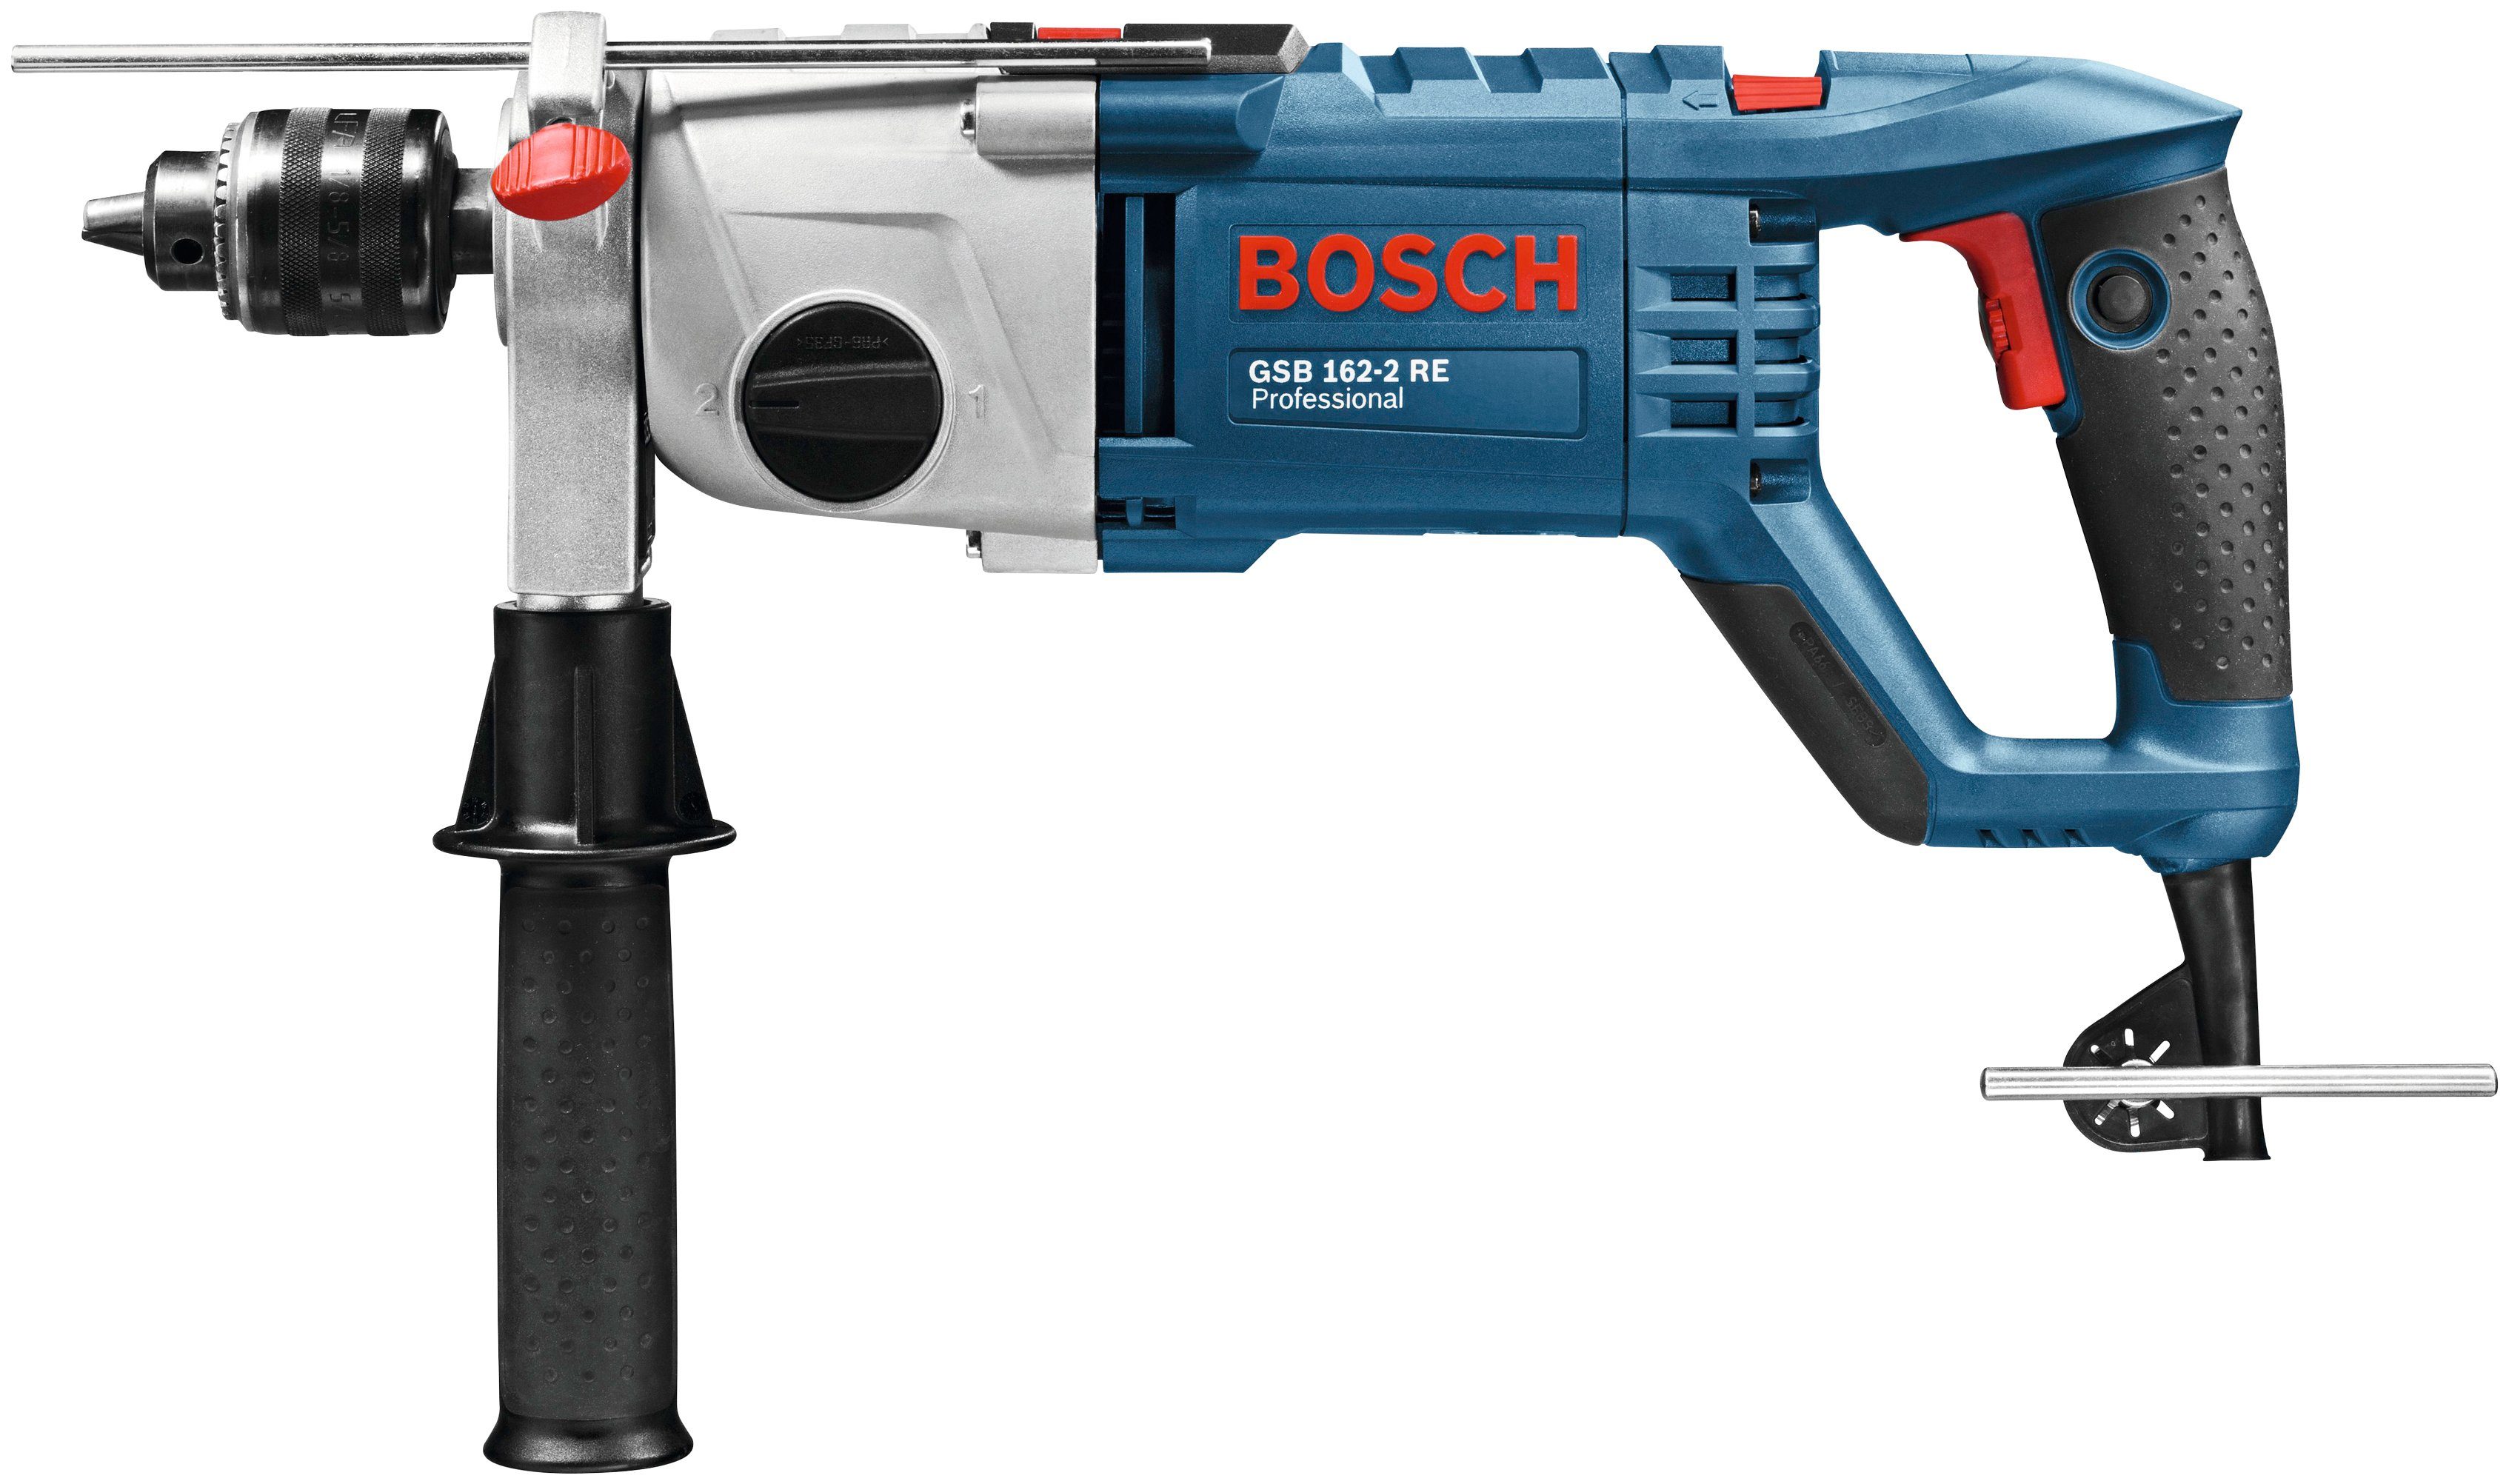 Professional, Schlagbohrmaschine (1-tlg), max. 1800 Bosch RE 162-2 V, GSB Professional 230 U/min, Restart-Protection